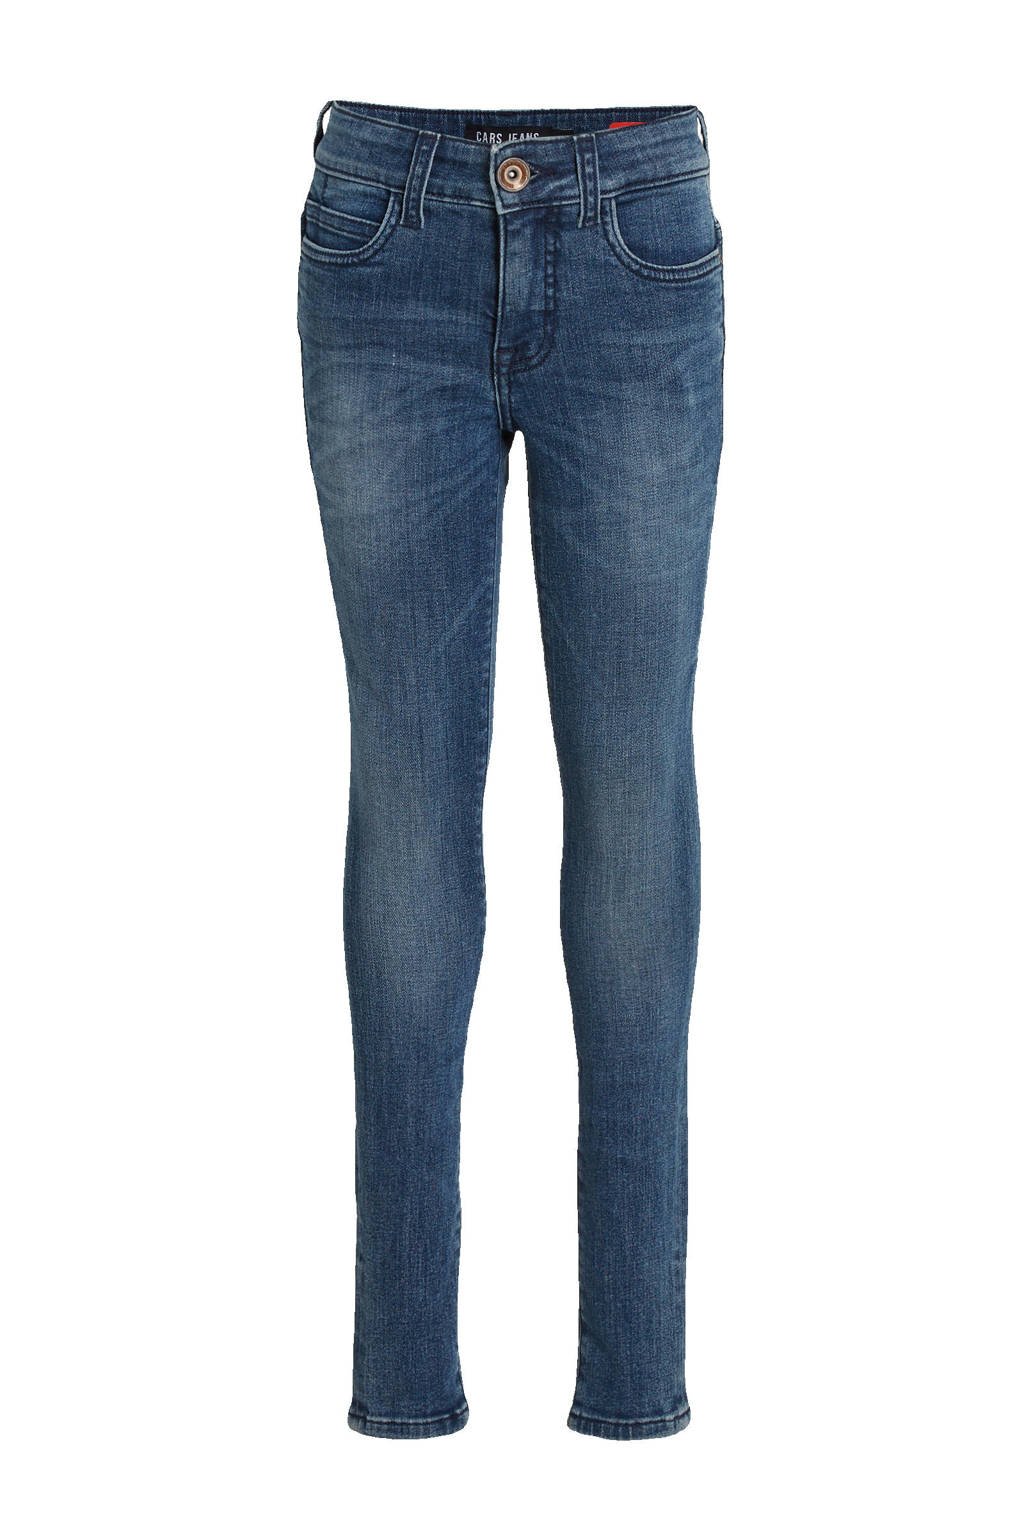 Donkerblauwe jongens Cars slim fit jeans Cleveland van denim met regular waist